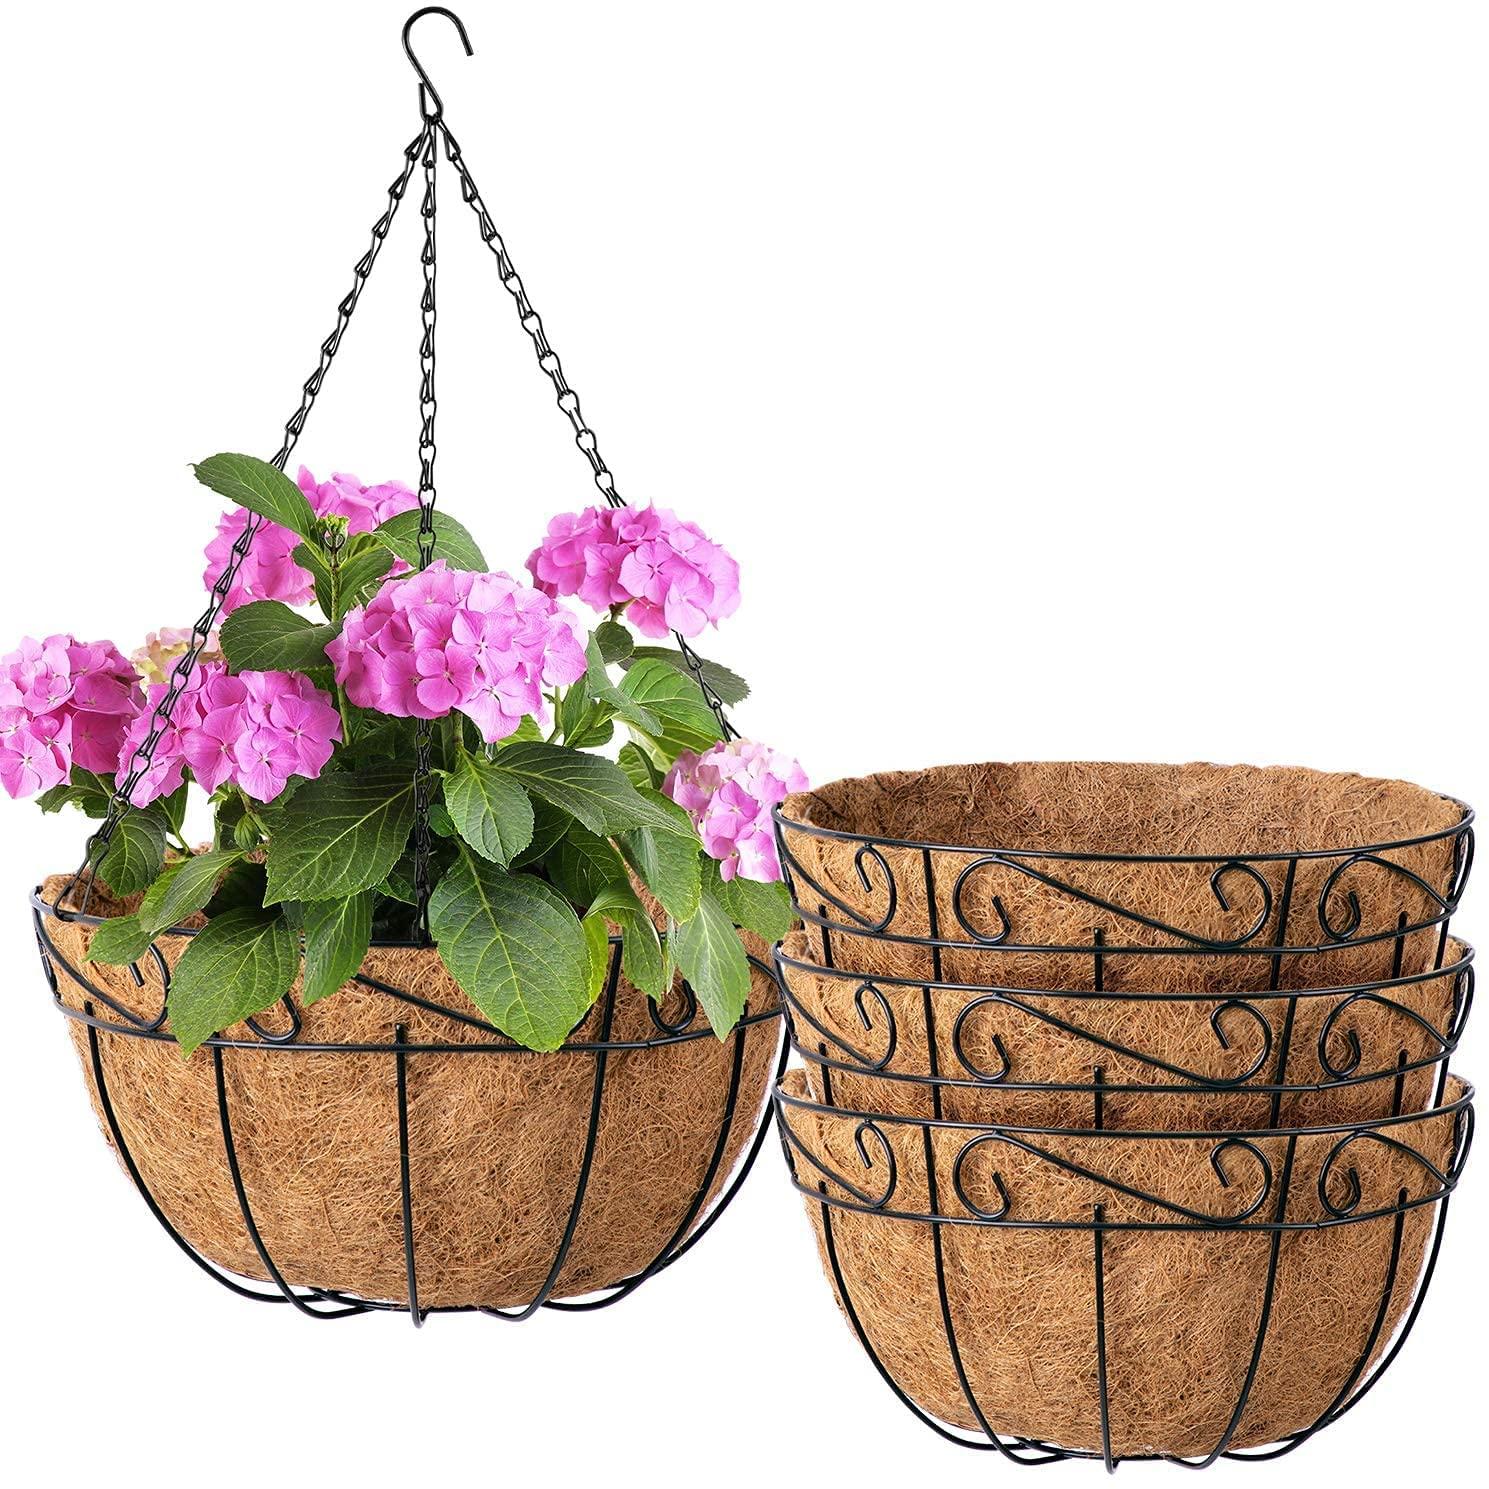 4 Amagabeli Metal Hanging Plant Planter Baskets for $19.48 Shipped